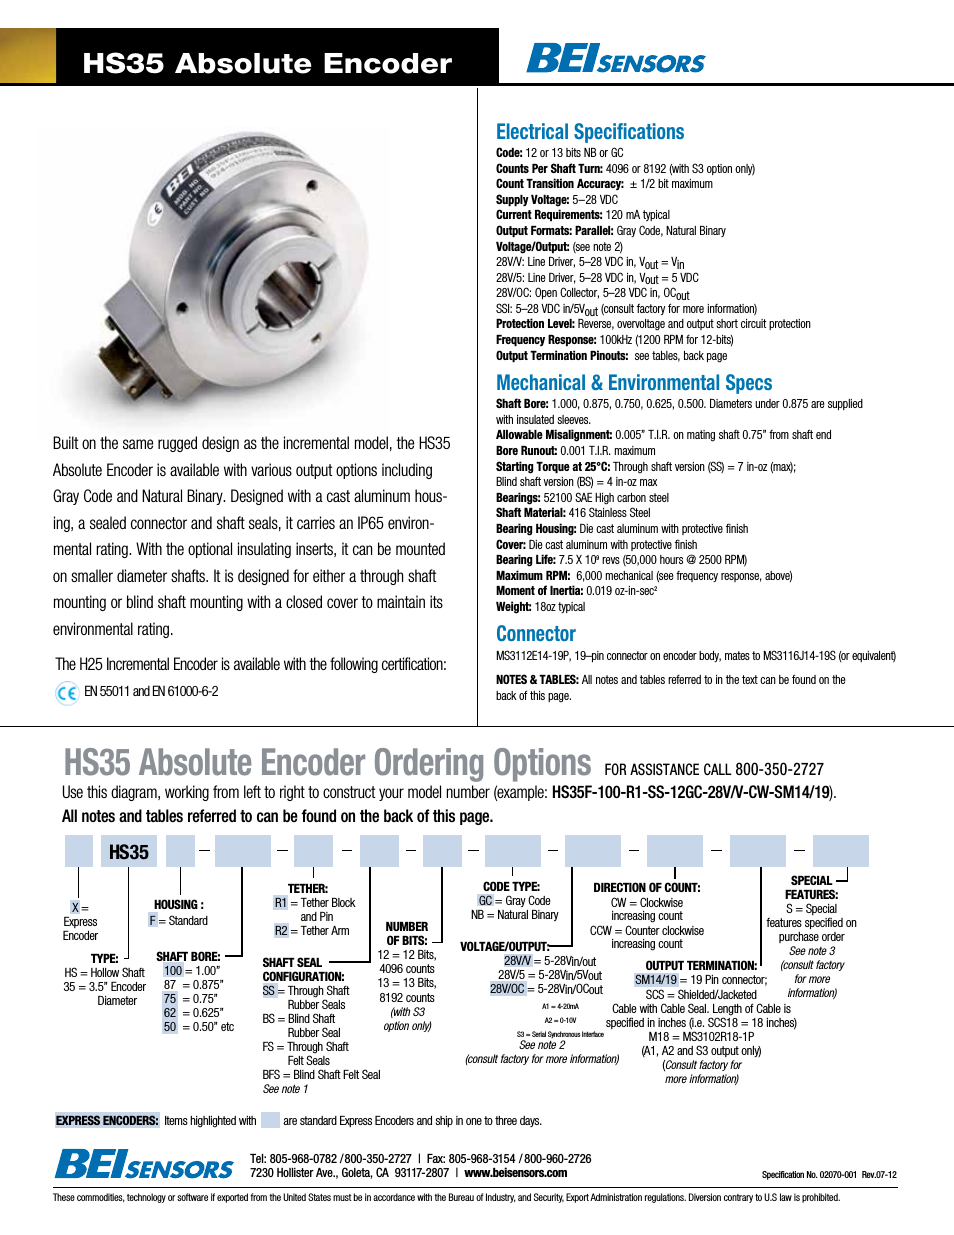 HS35 Absolute Hollow Shaft Encoder